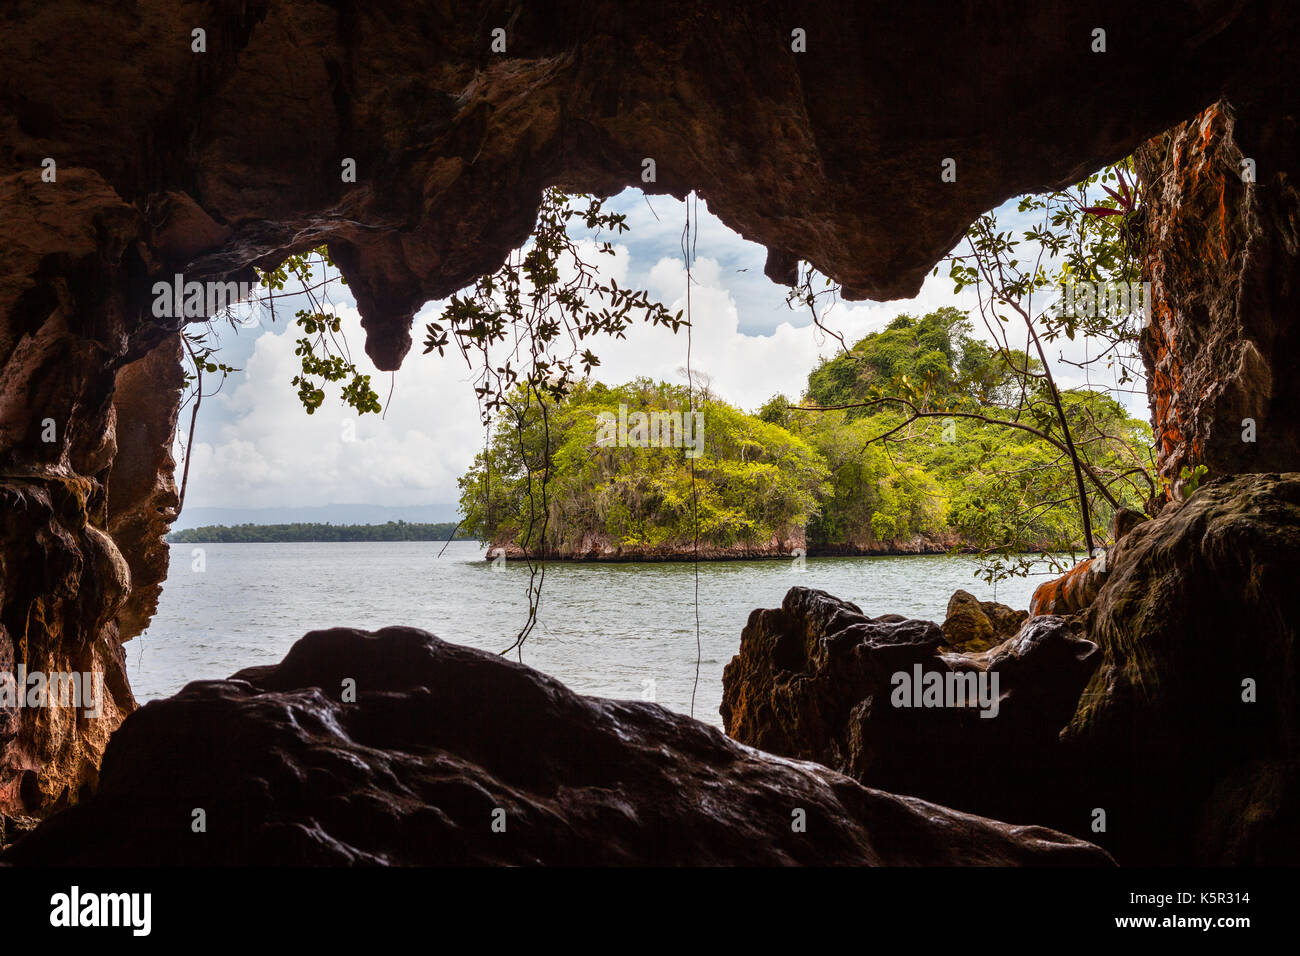 Grotte dans le Parque Nacional de los Haitises, República Dominicana Banque D'Images